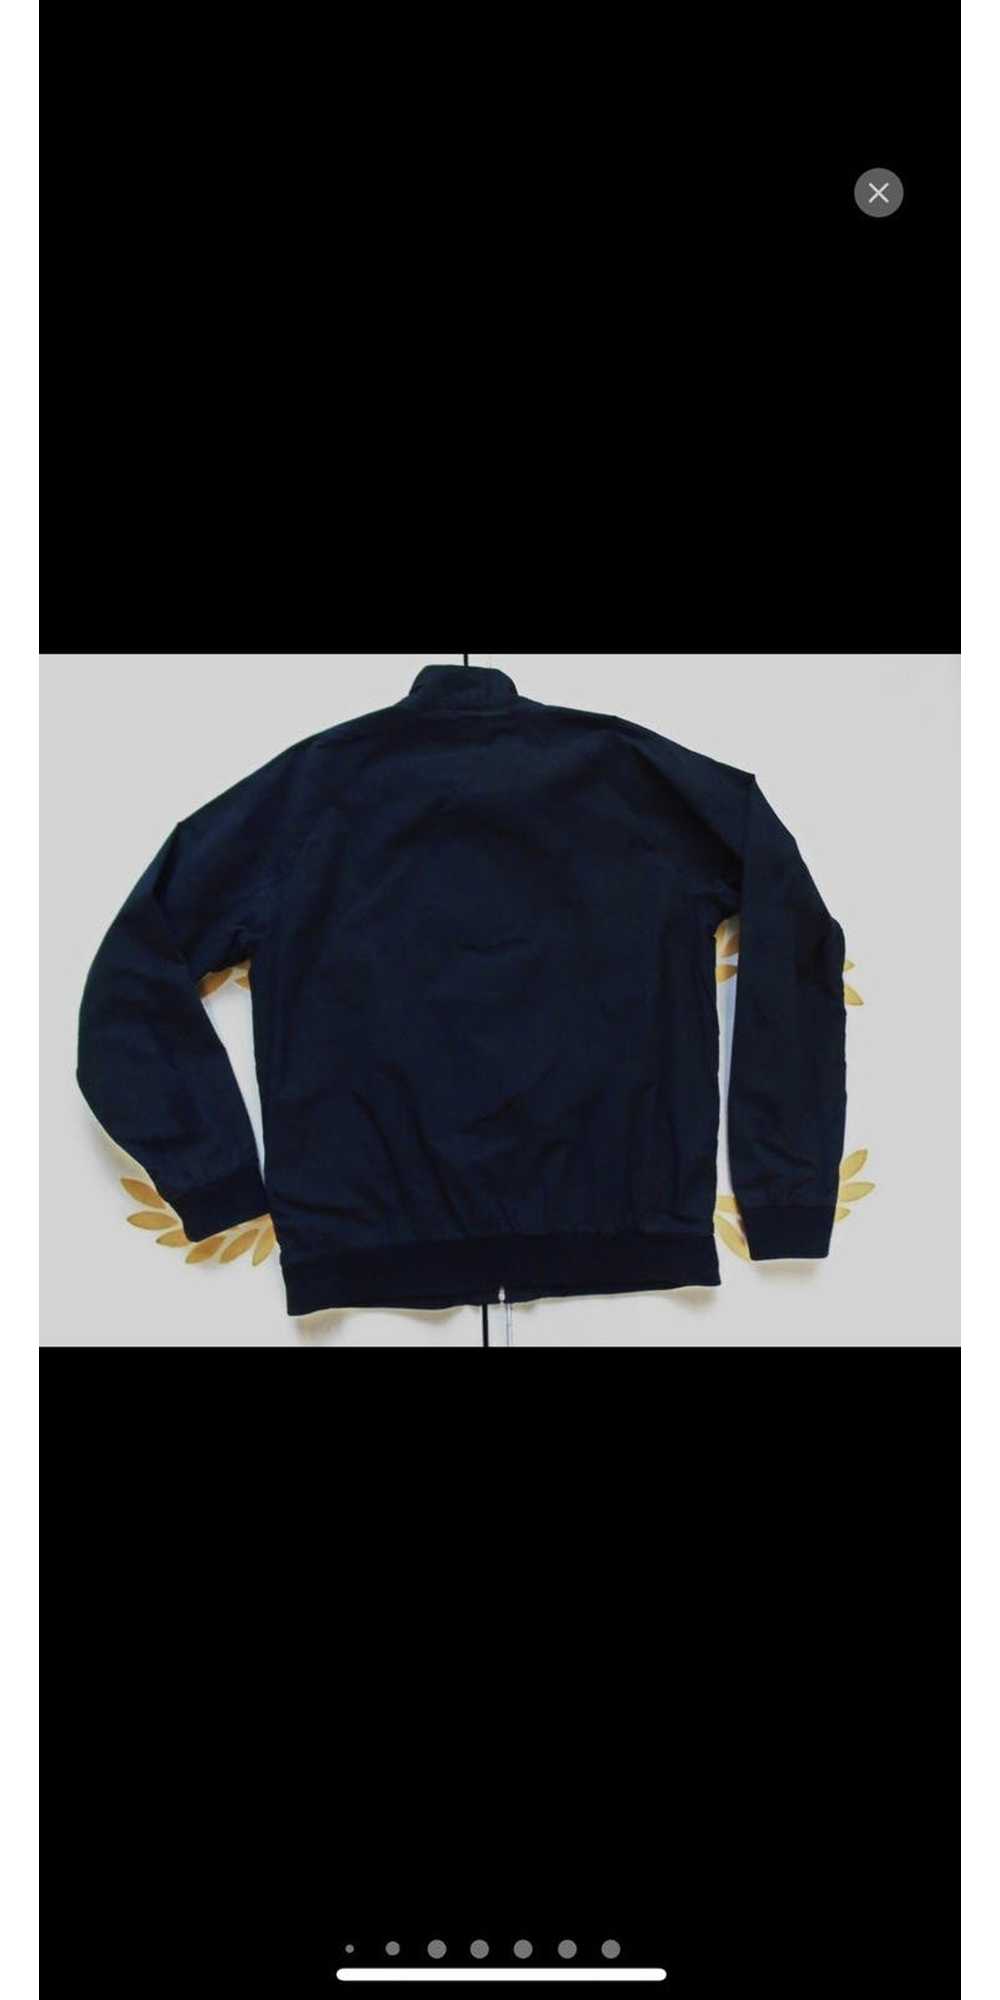 Carhartt Carhartt Rude jacket - image 4